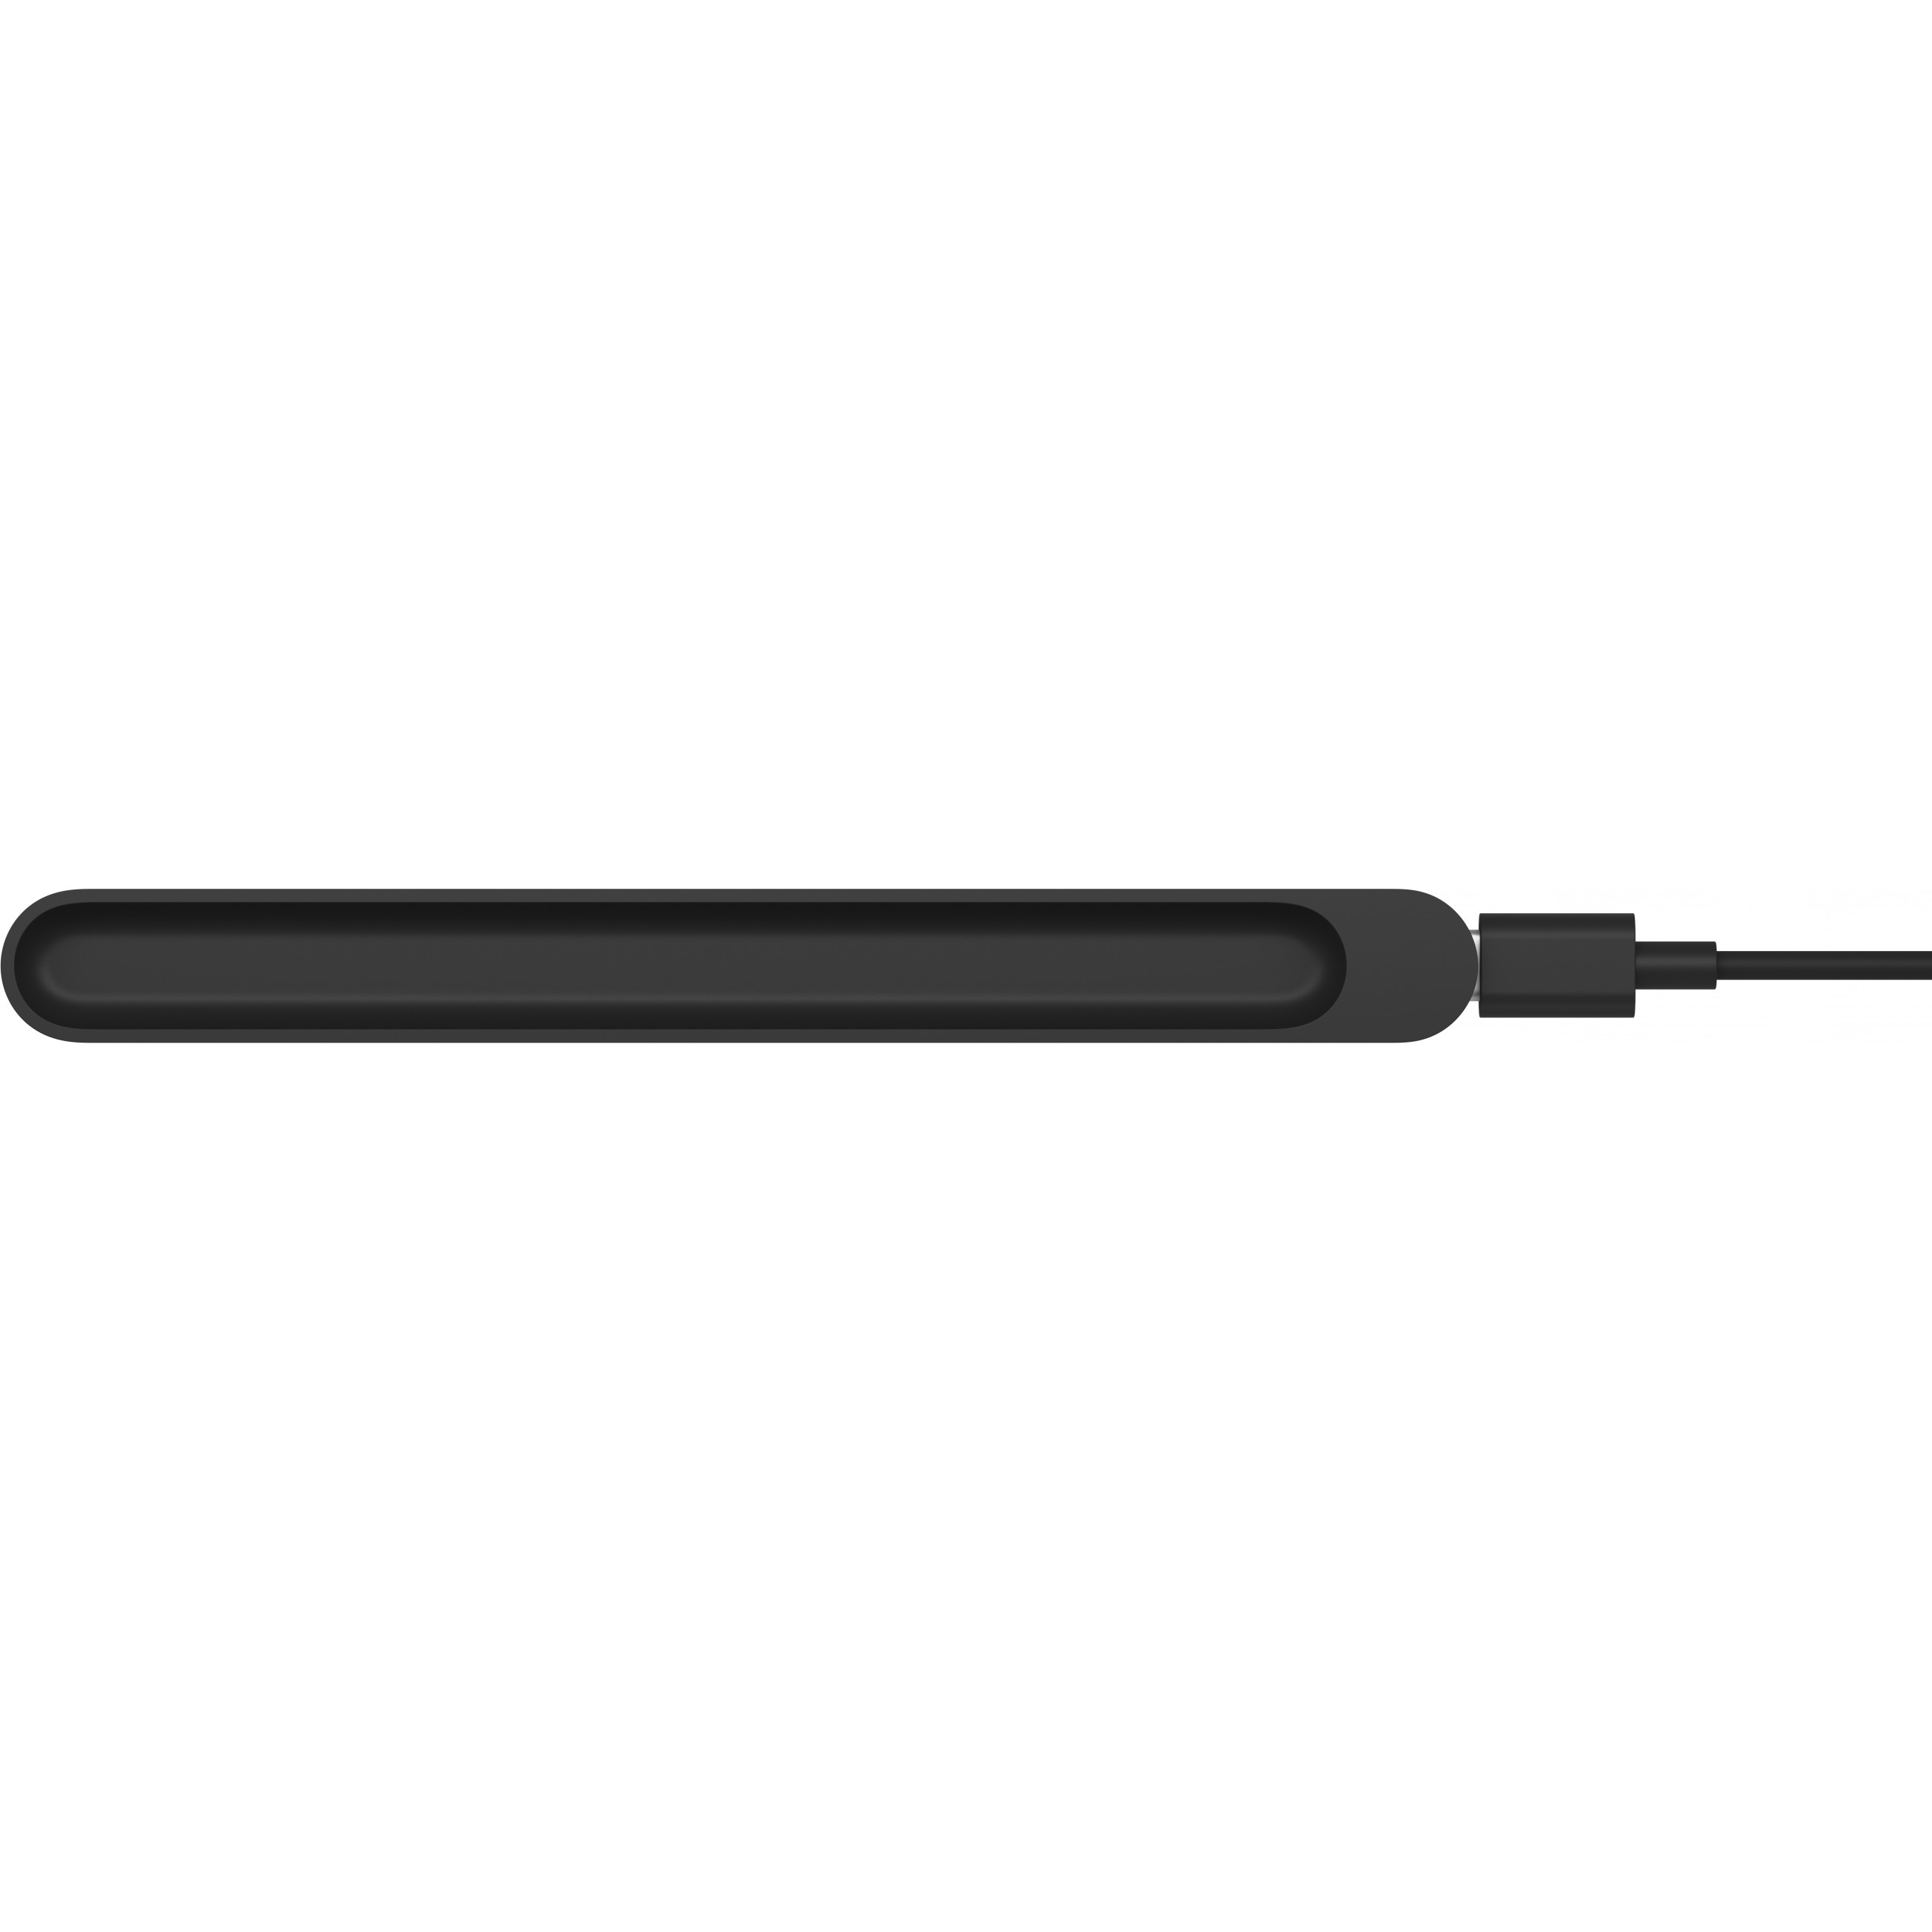 Microsoft MS Surface Slim Pen 2 Charger Black